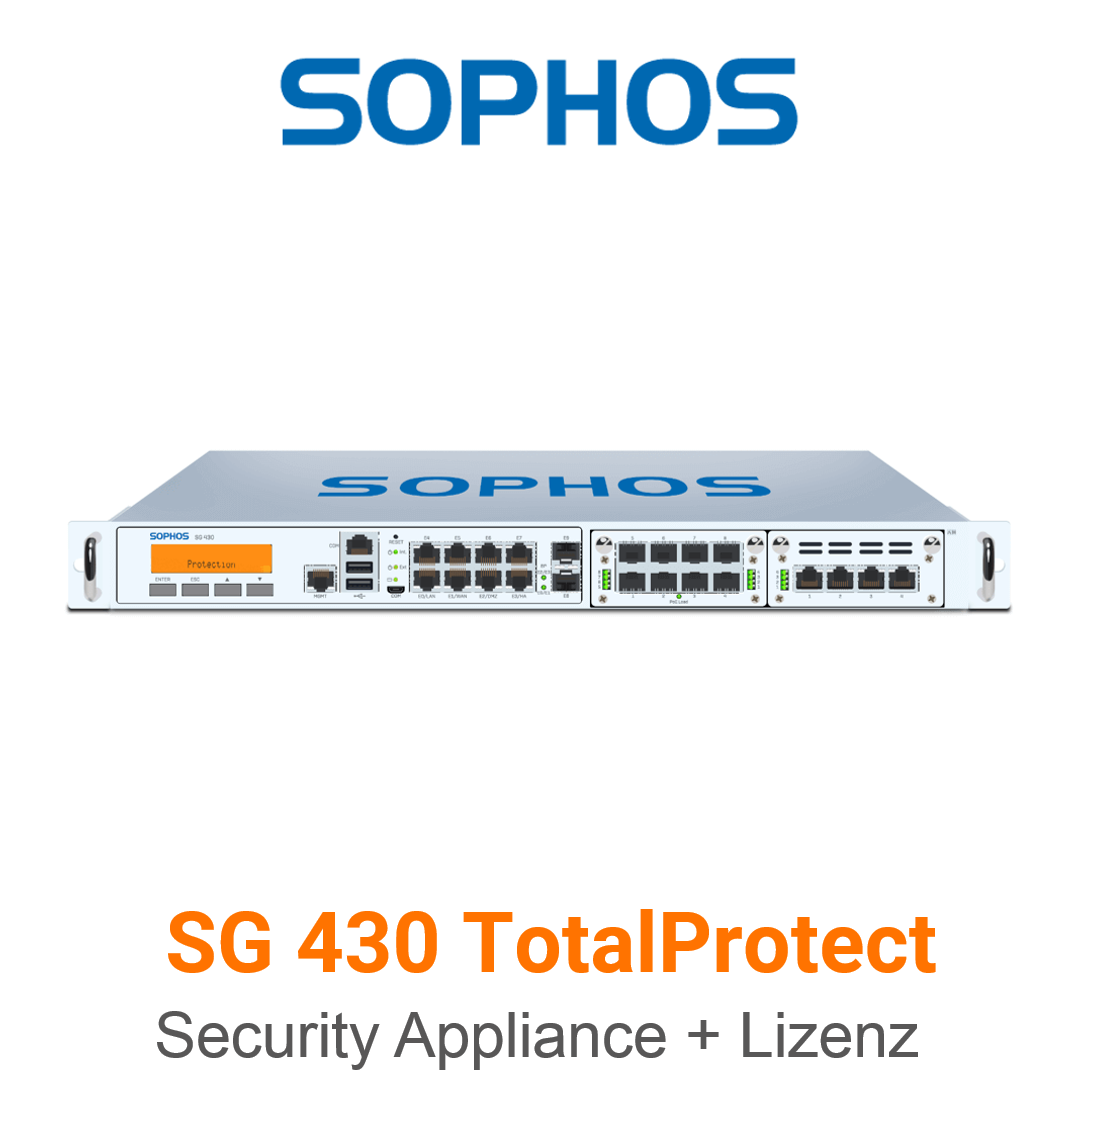 Sophos SG 430 TotalProtect Bundle (Hardware + Lizenz)